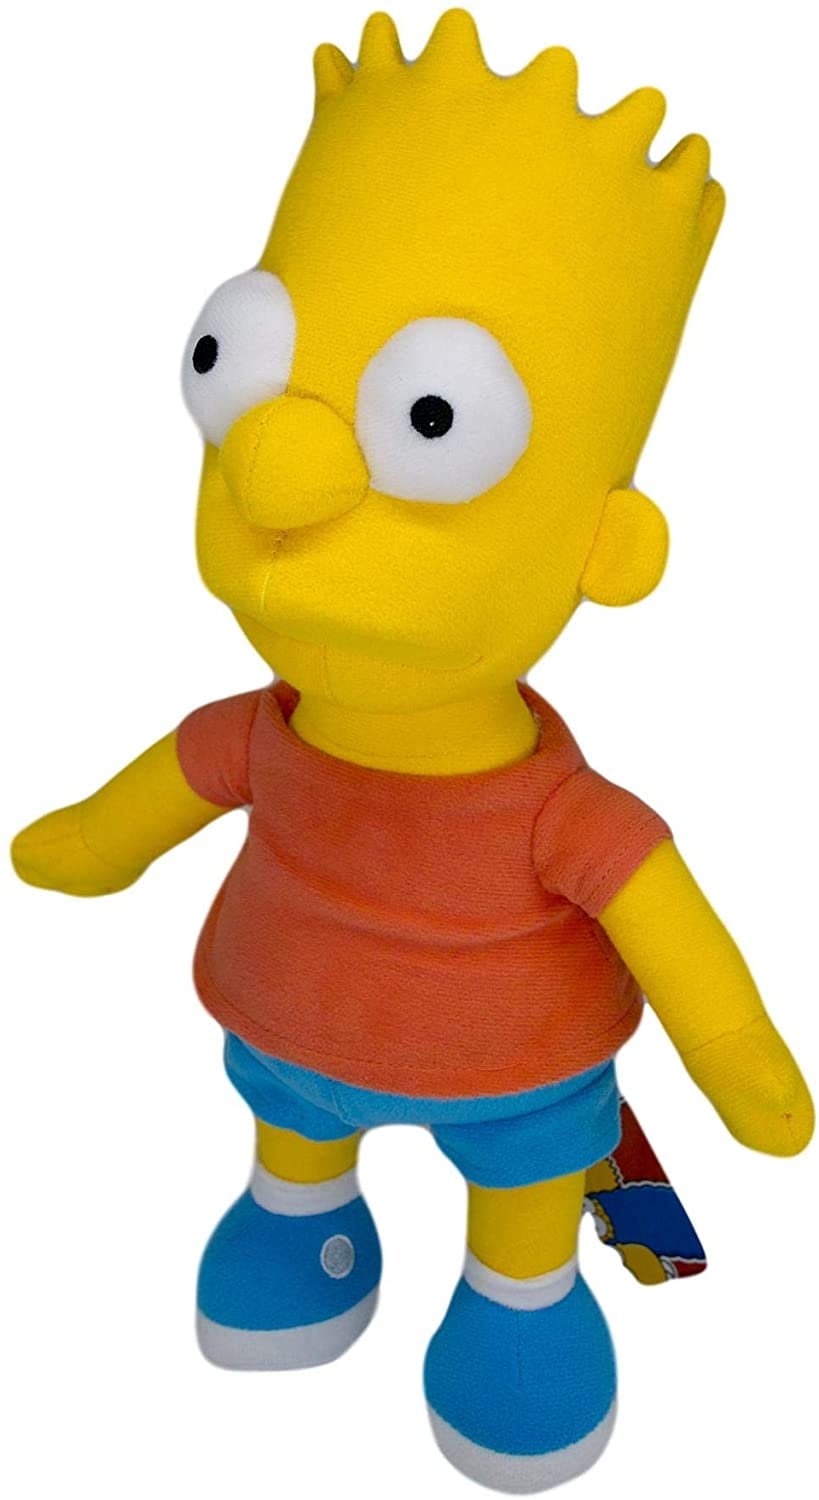 The Simpsons 12 Inch Bart Stuffed Plush Toy Doll - Walmart.com